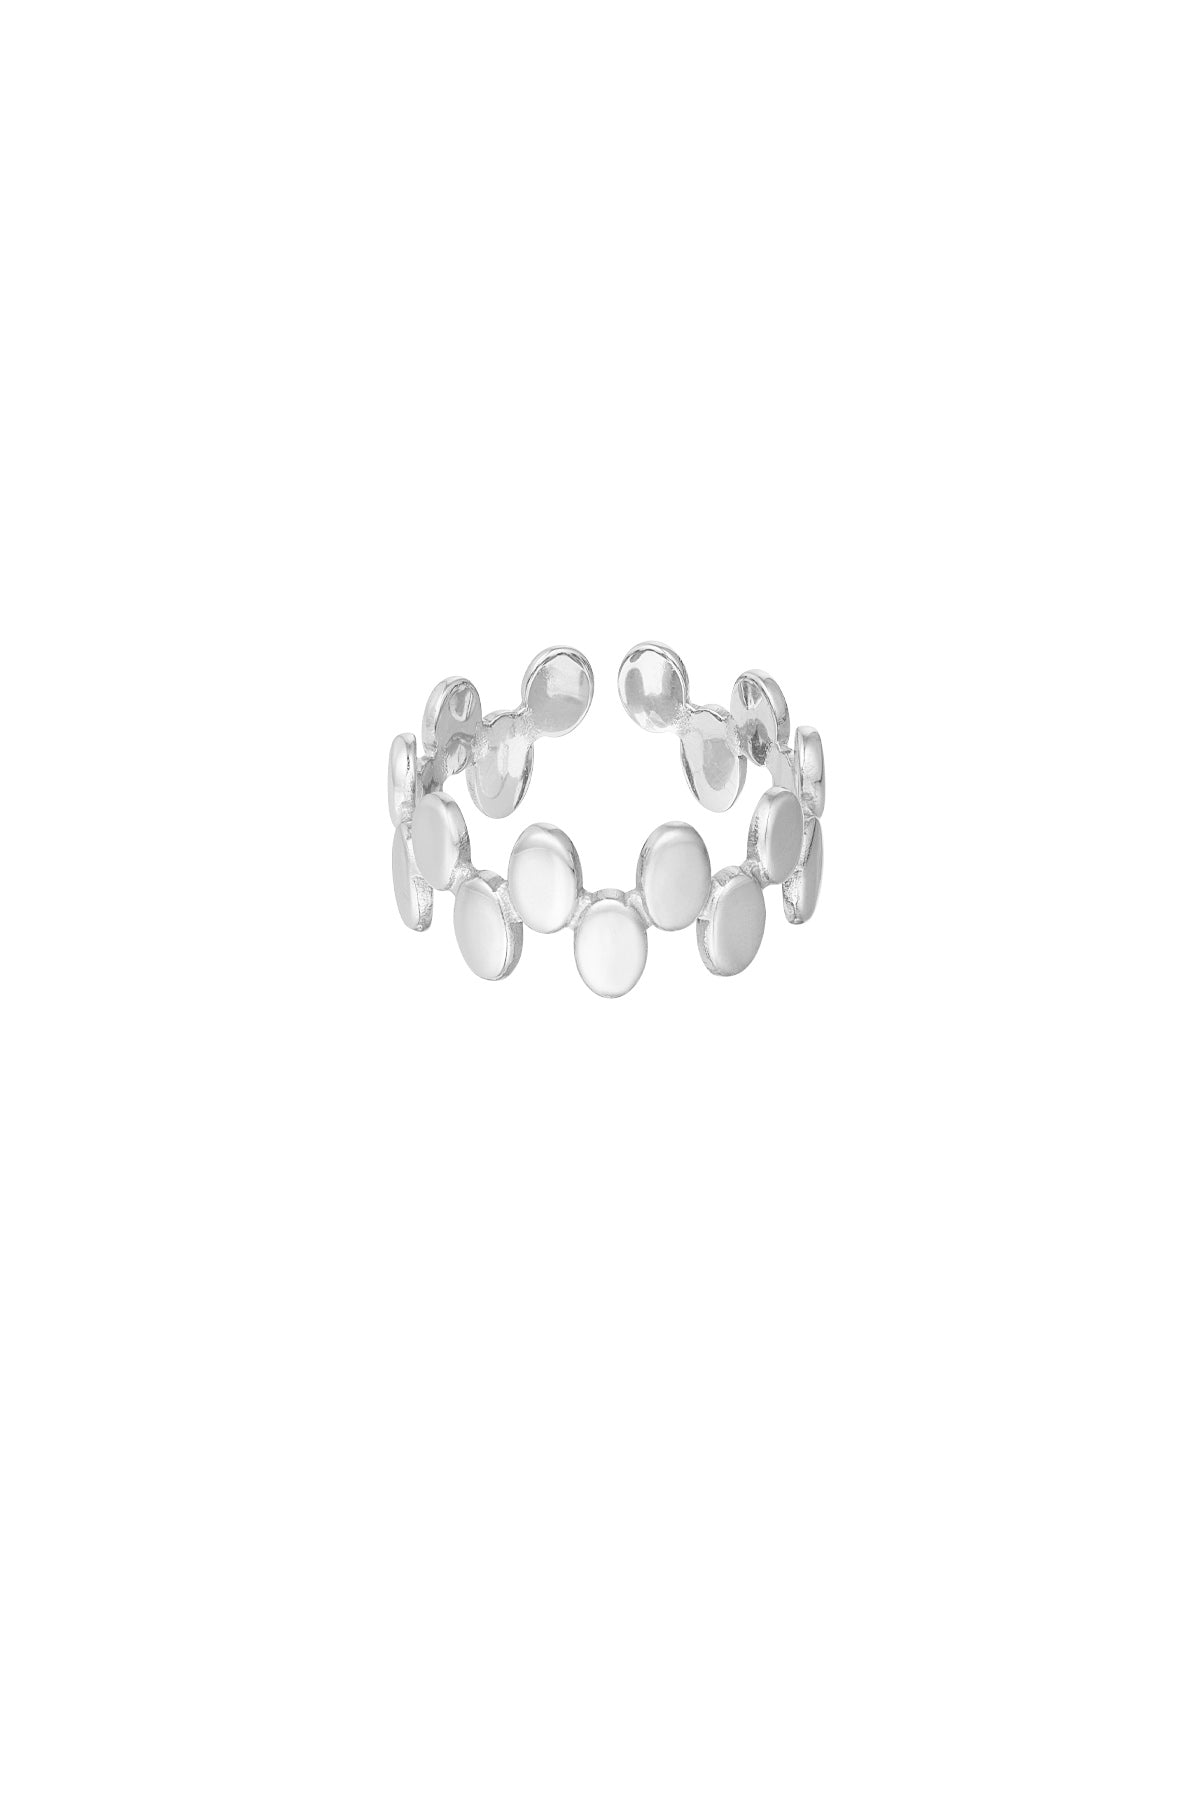 Ring rondjes - zilver